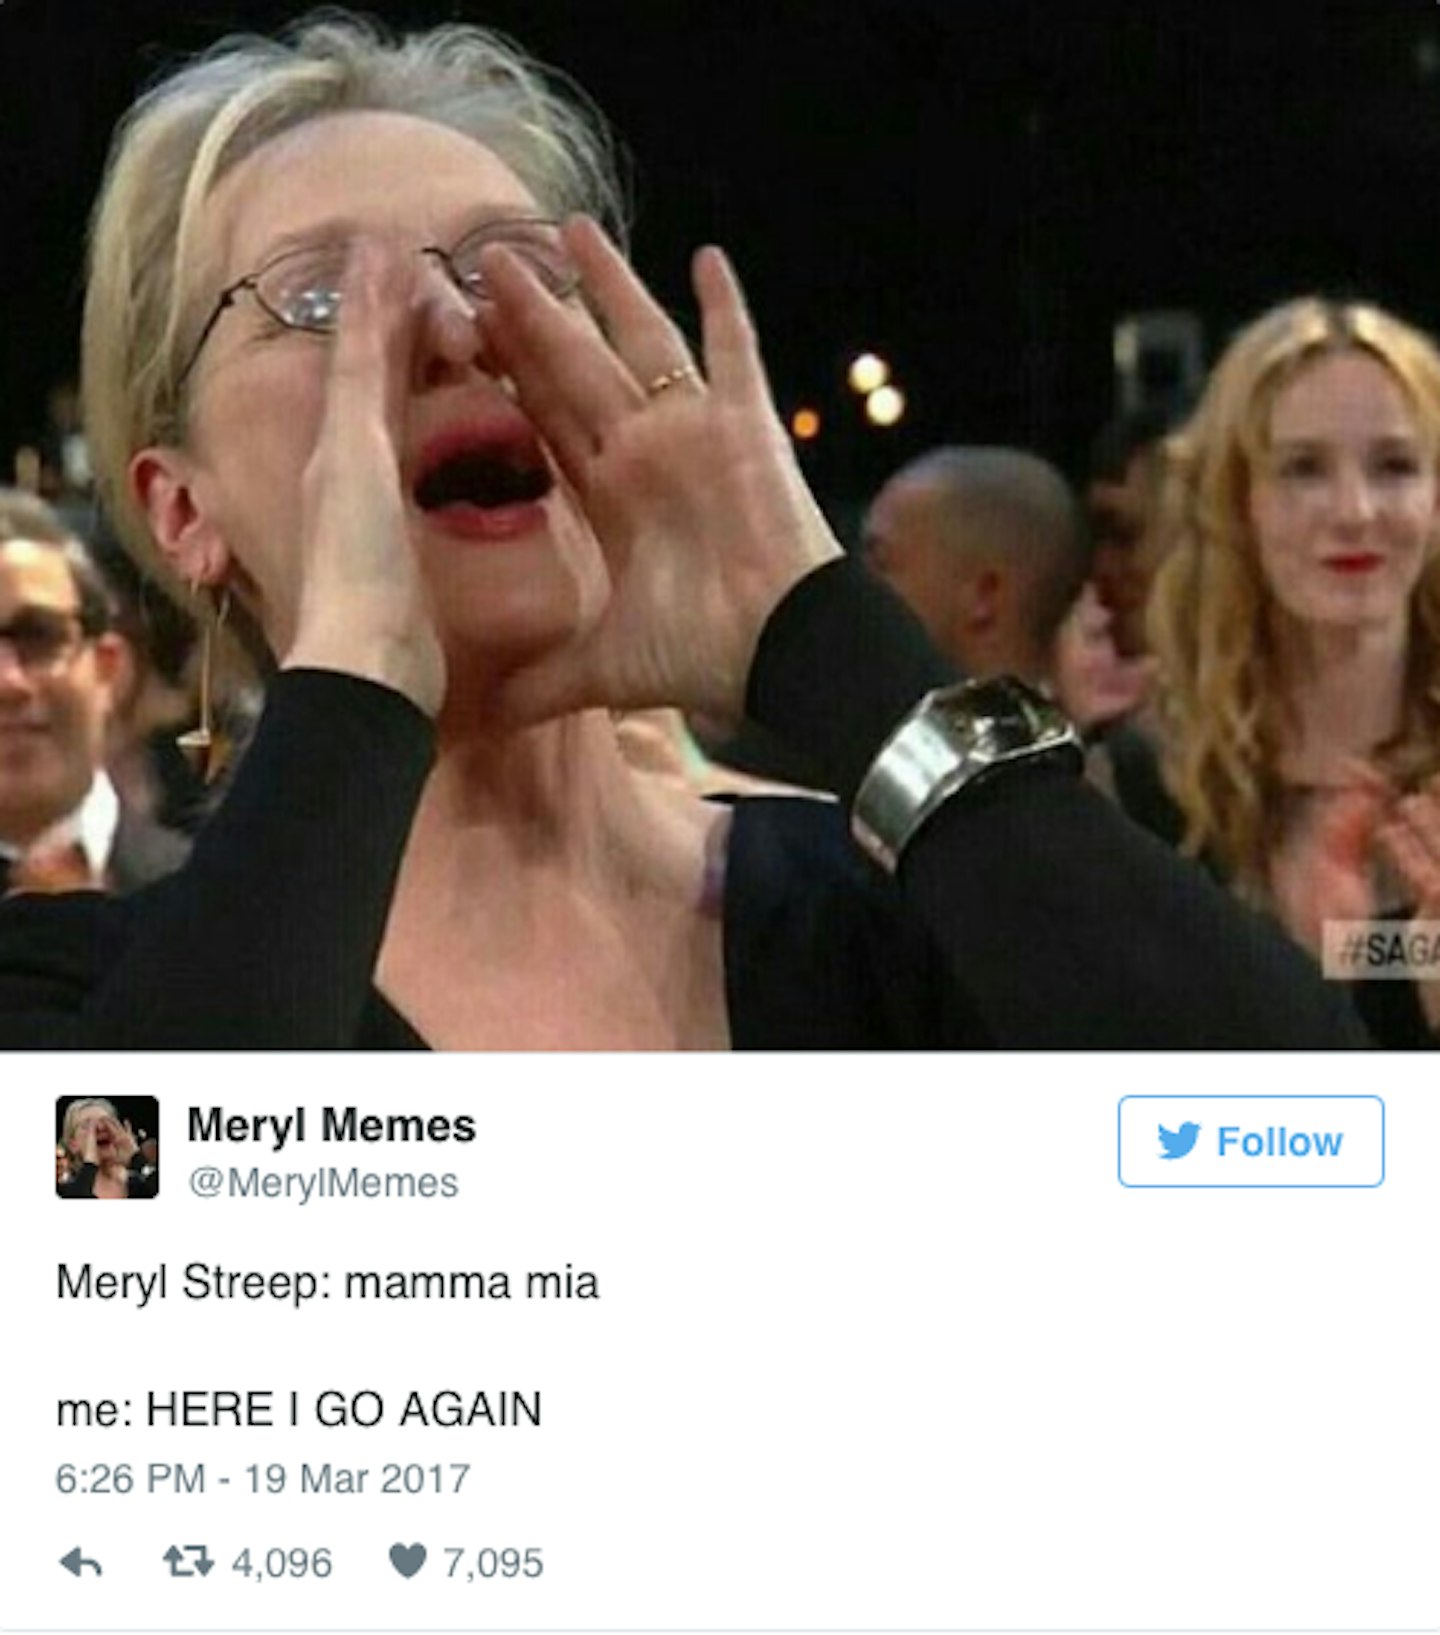 meryl streep singing meme twitter